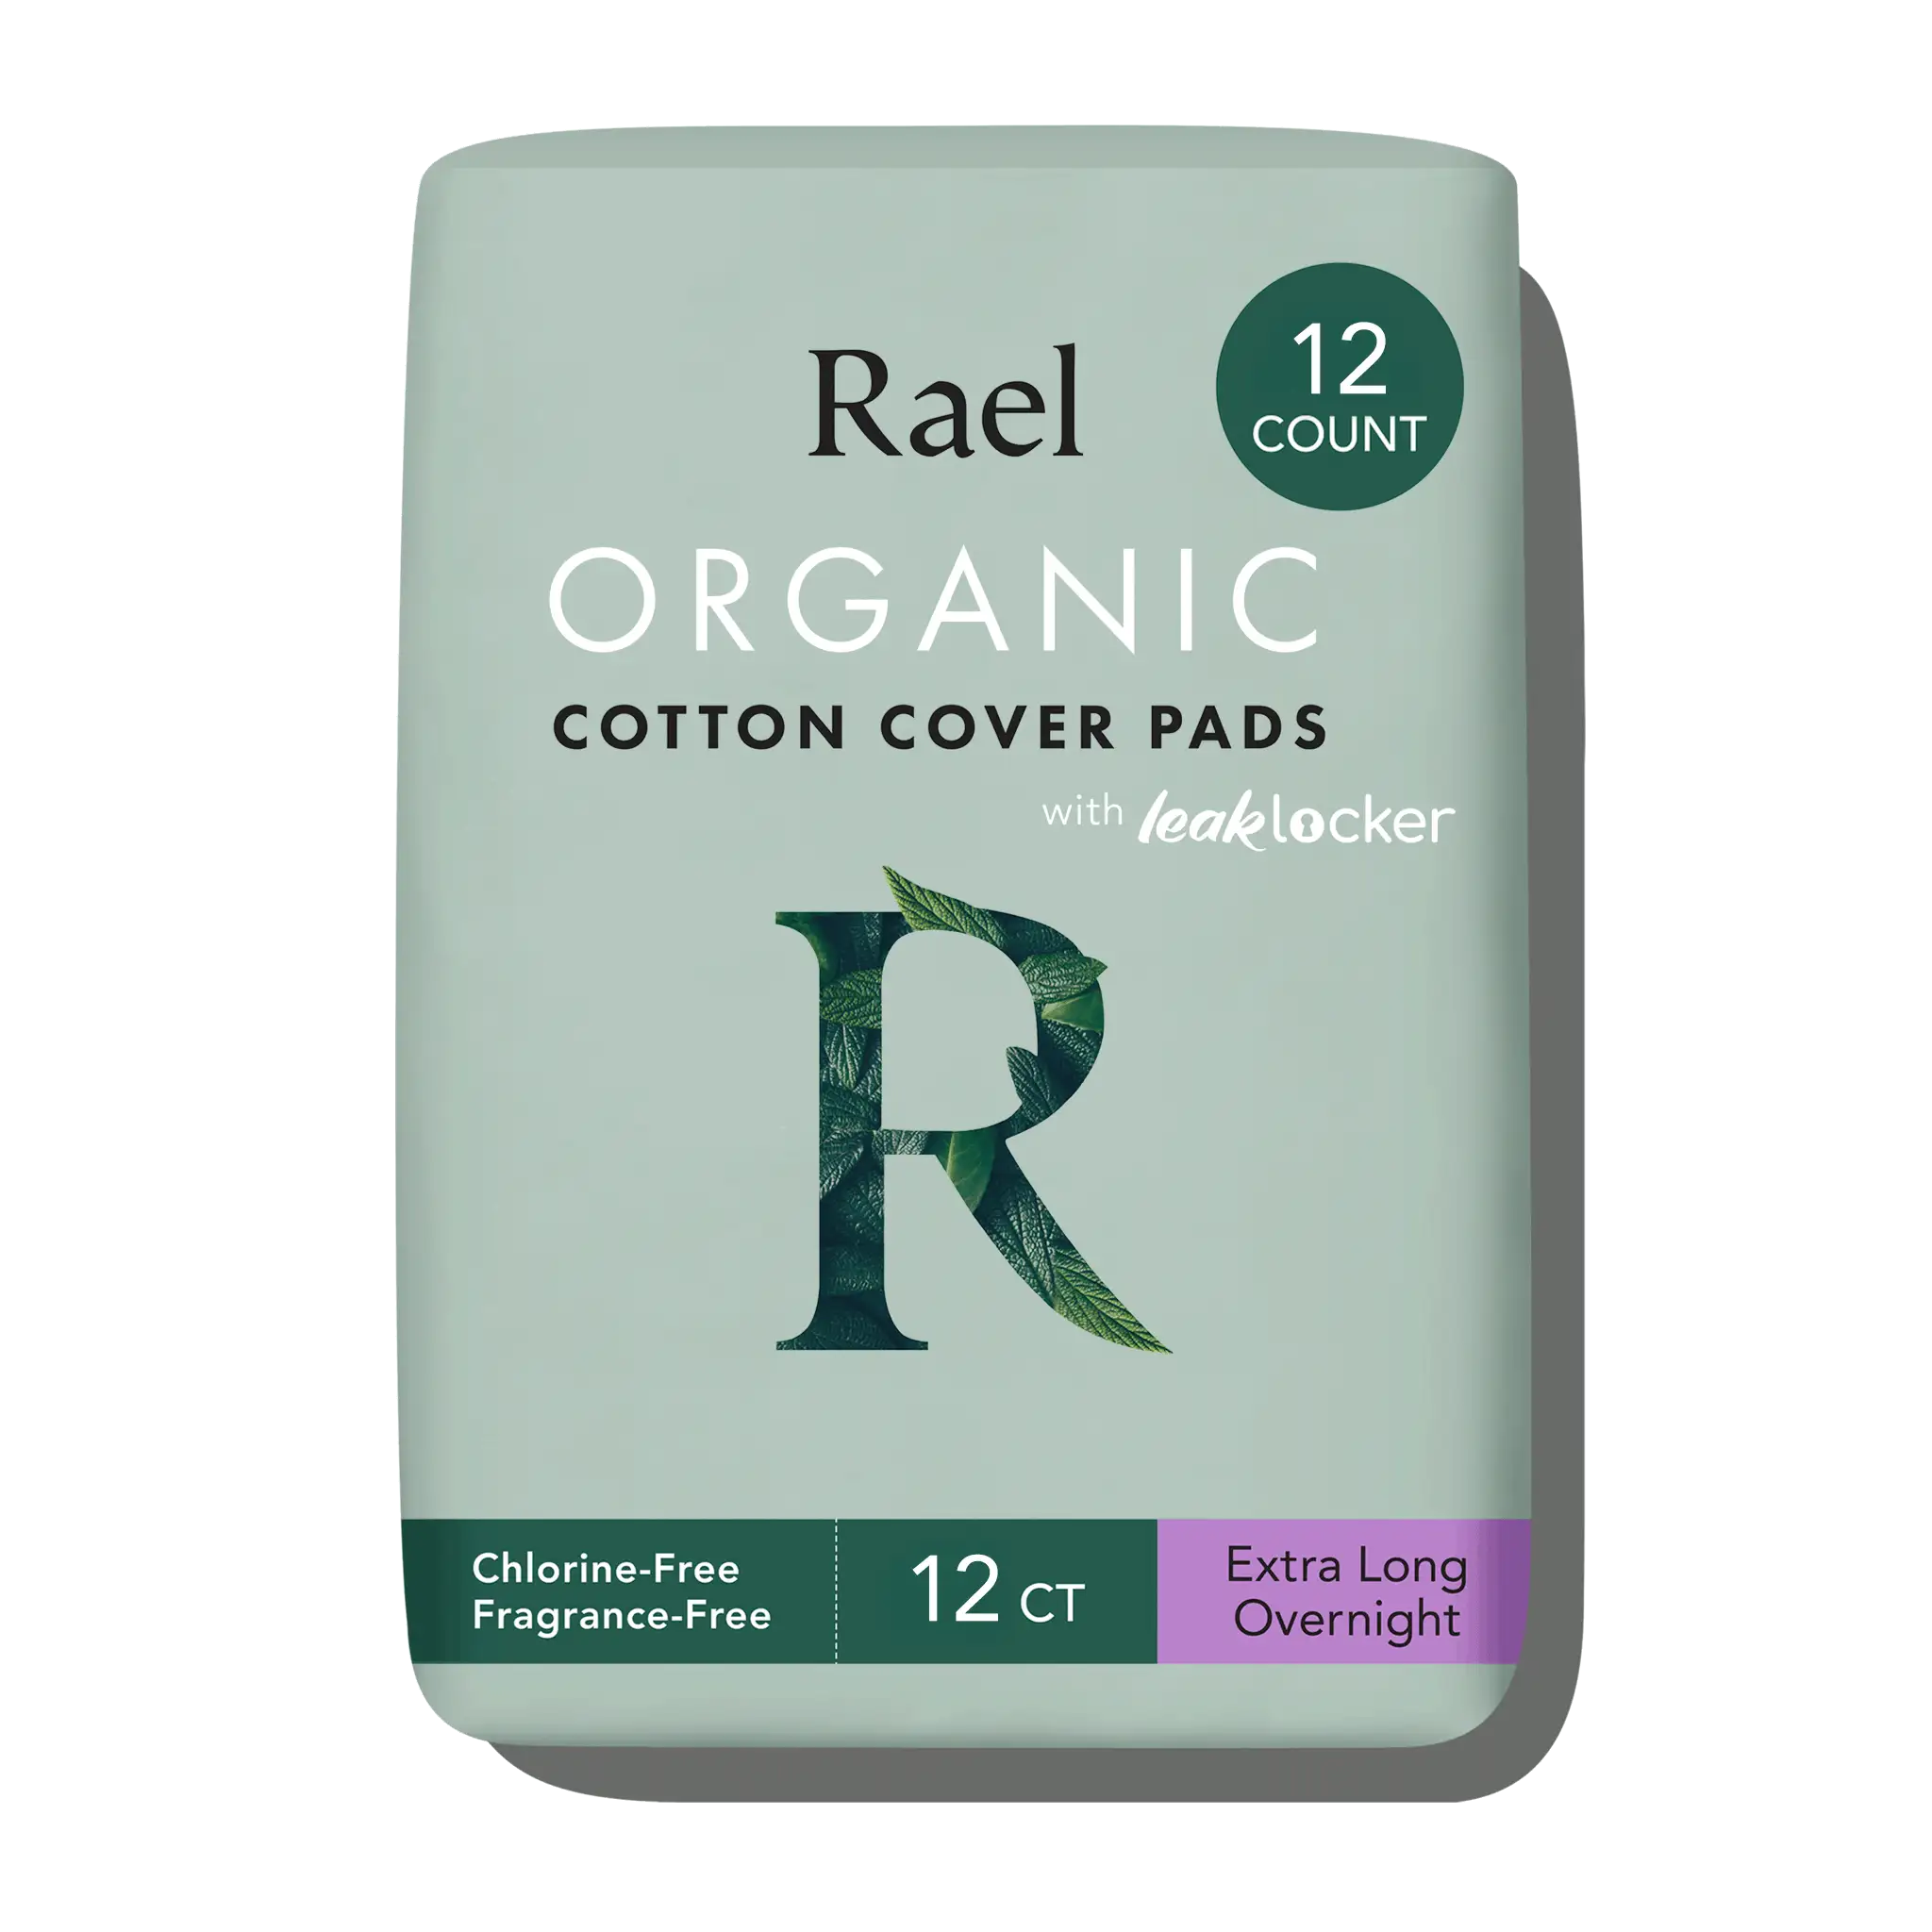 Rael Products, 975868 votes, 101 reviews - Shop & Review